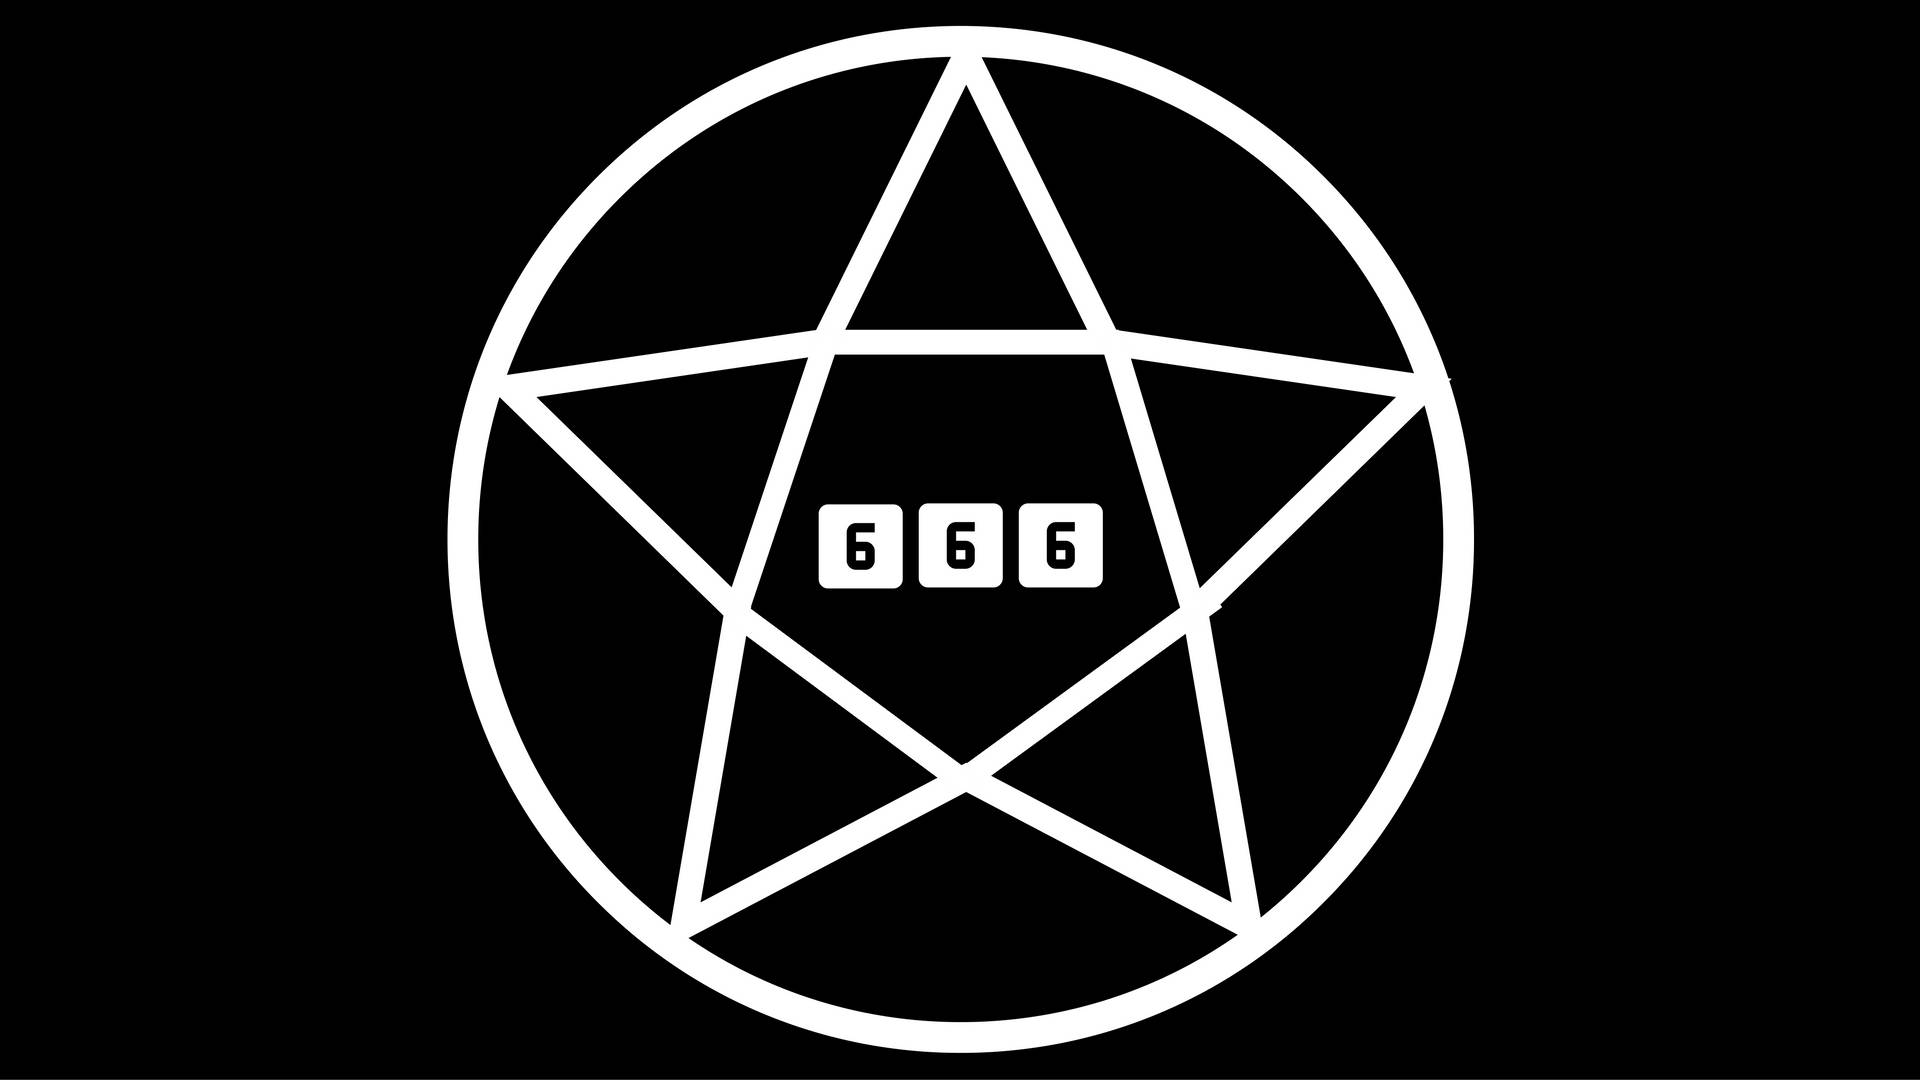 Minimalist 666 Pentagram Wallpaper